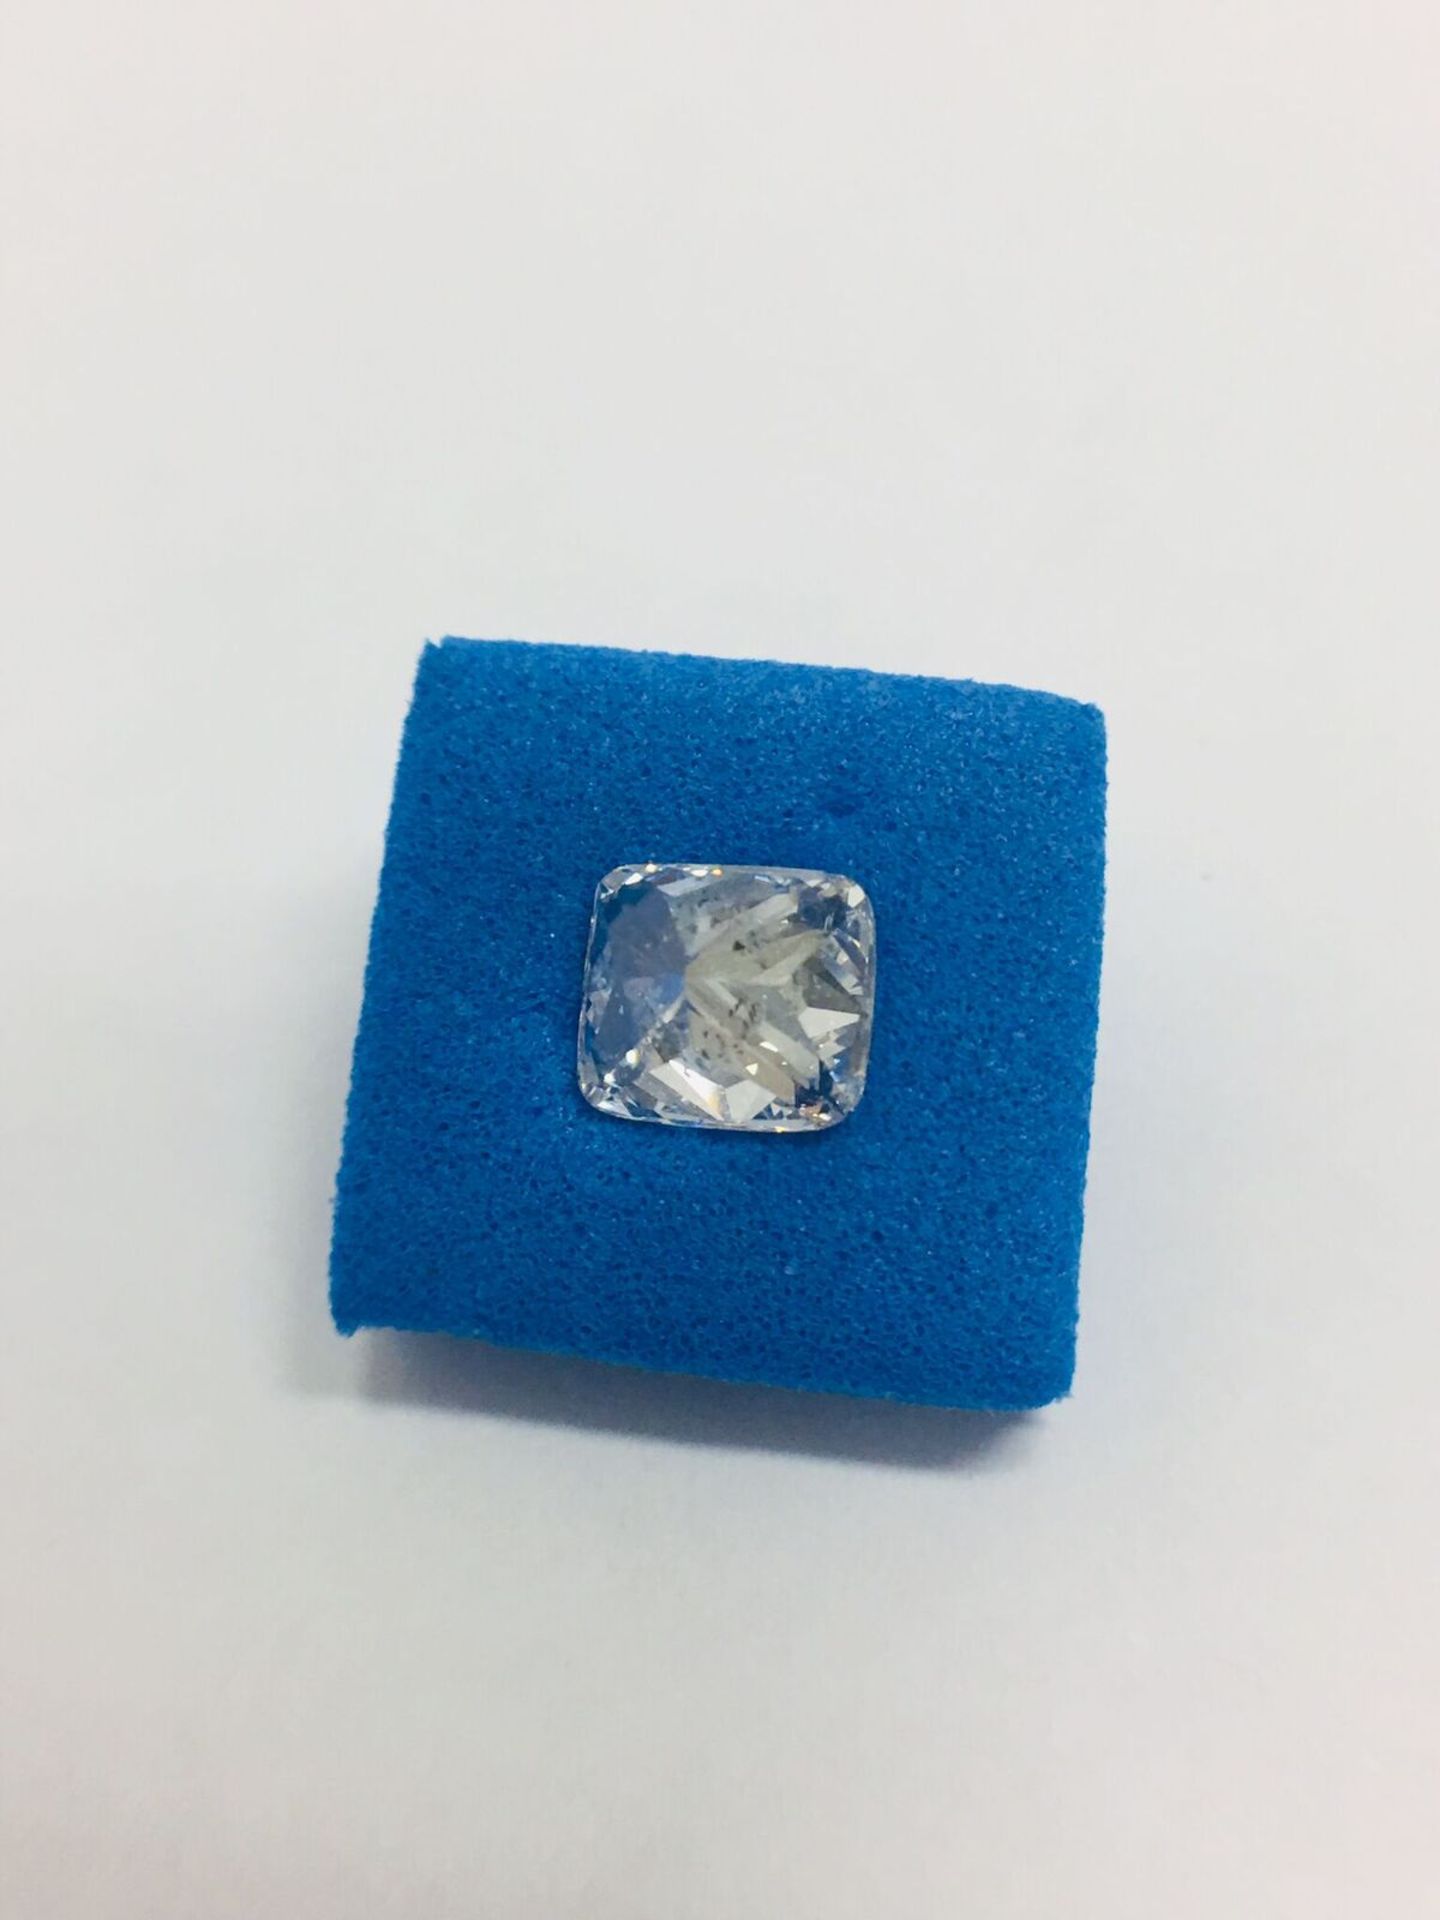 1.01ct Cushion Cut Natural Diamond - Image 2 of 2